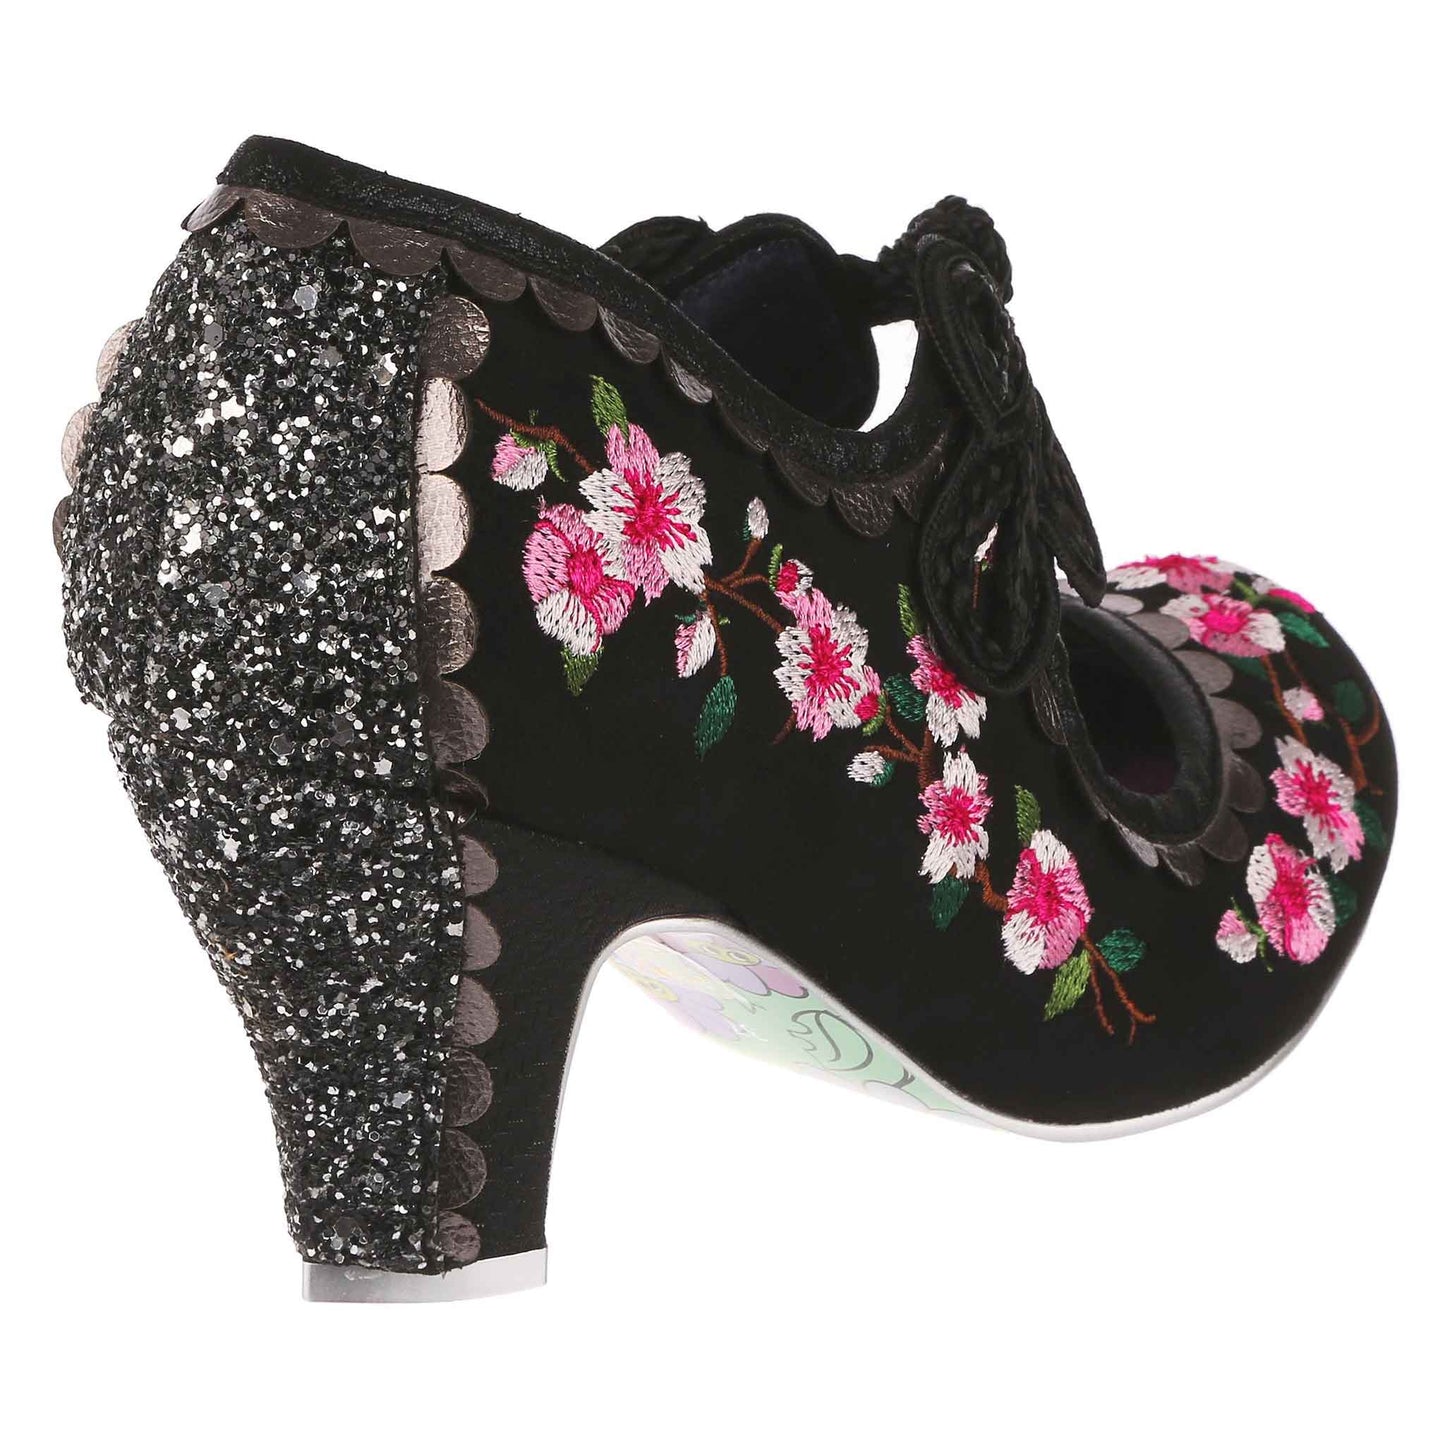 Irregular Choice Women's 4255-90 Cherry Blossoming Heel Shoes Black